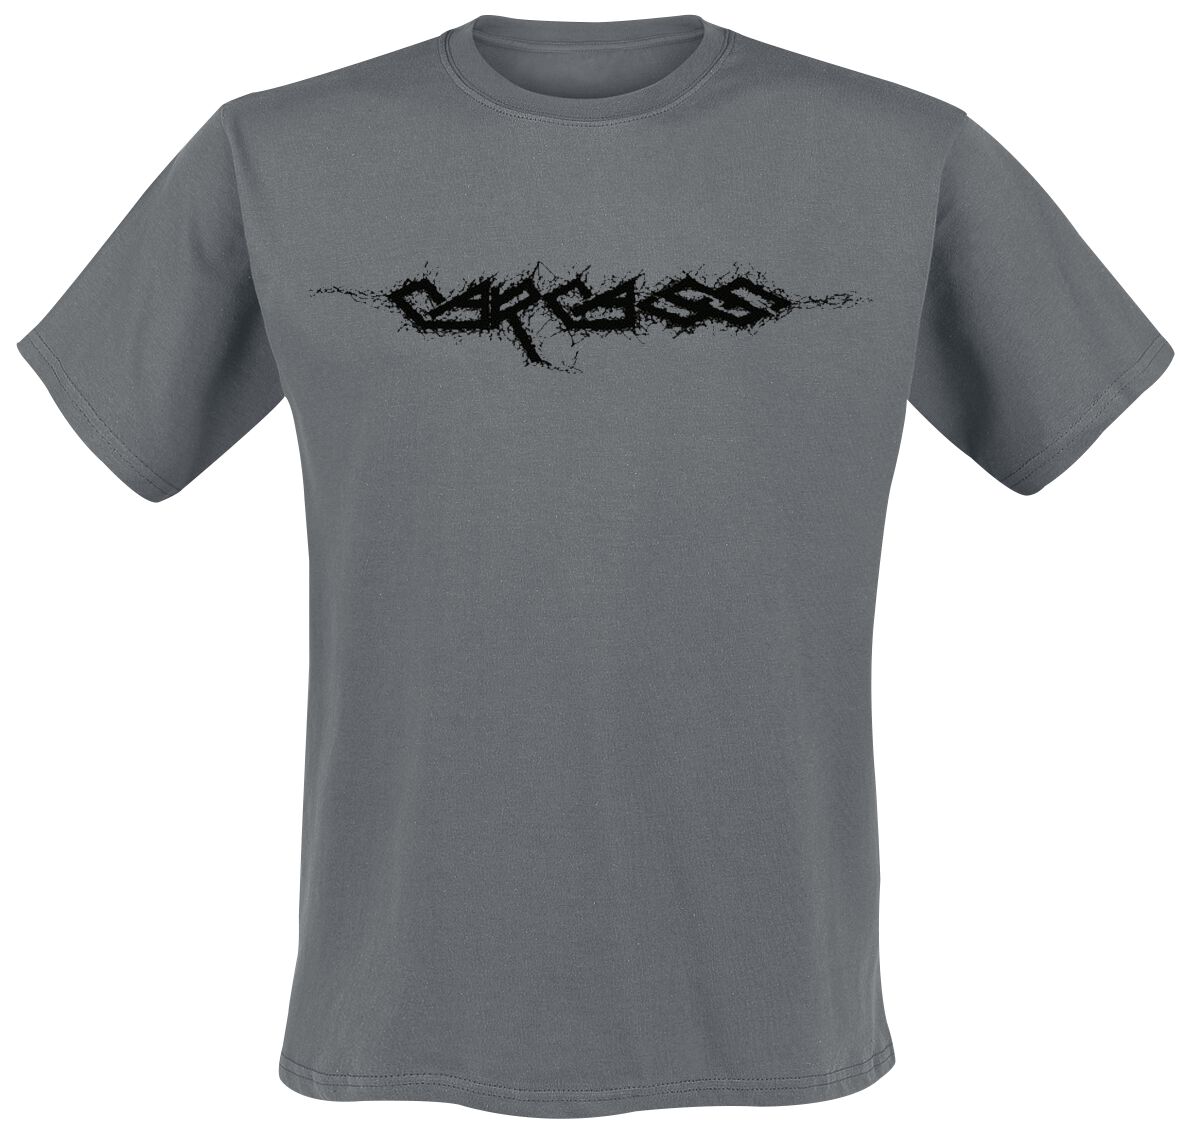 Carcass T-Shirt - Logo - M bis XXL - für Männer - Größe M - charcoal  - Lizenziertes Merchandise!